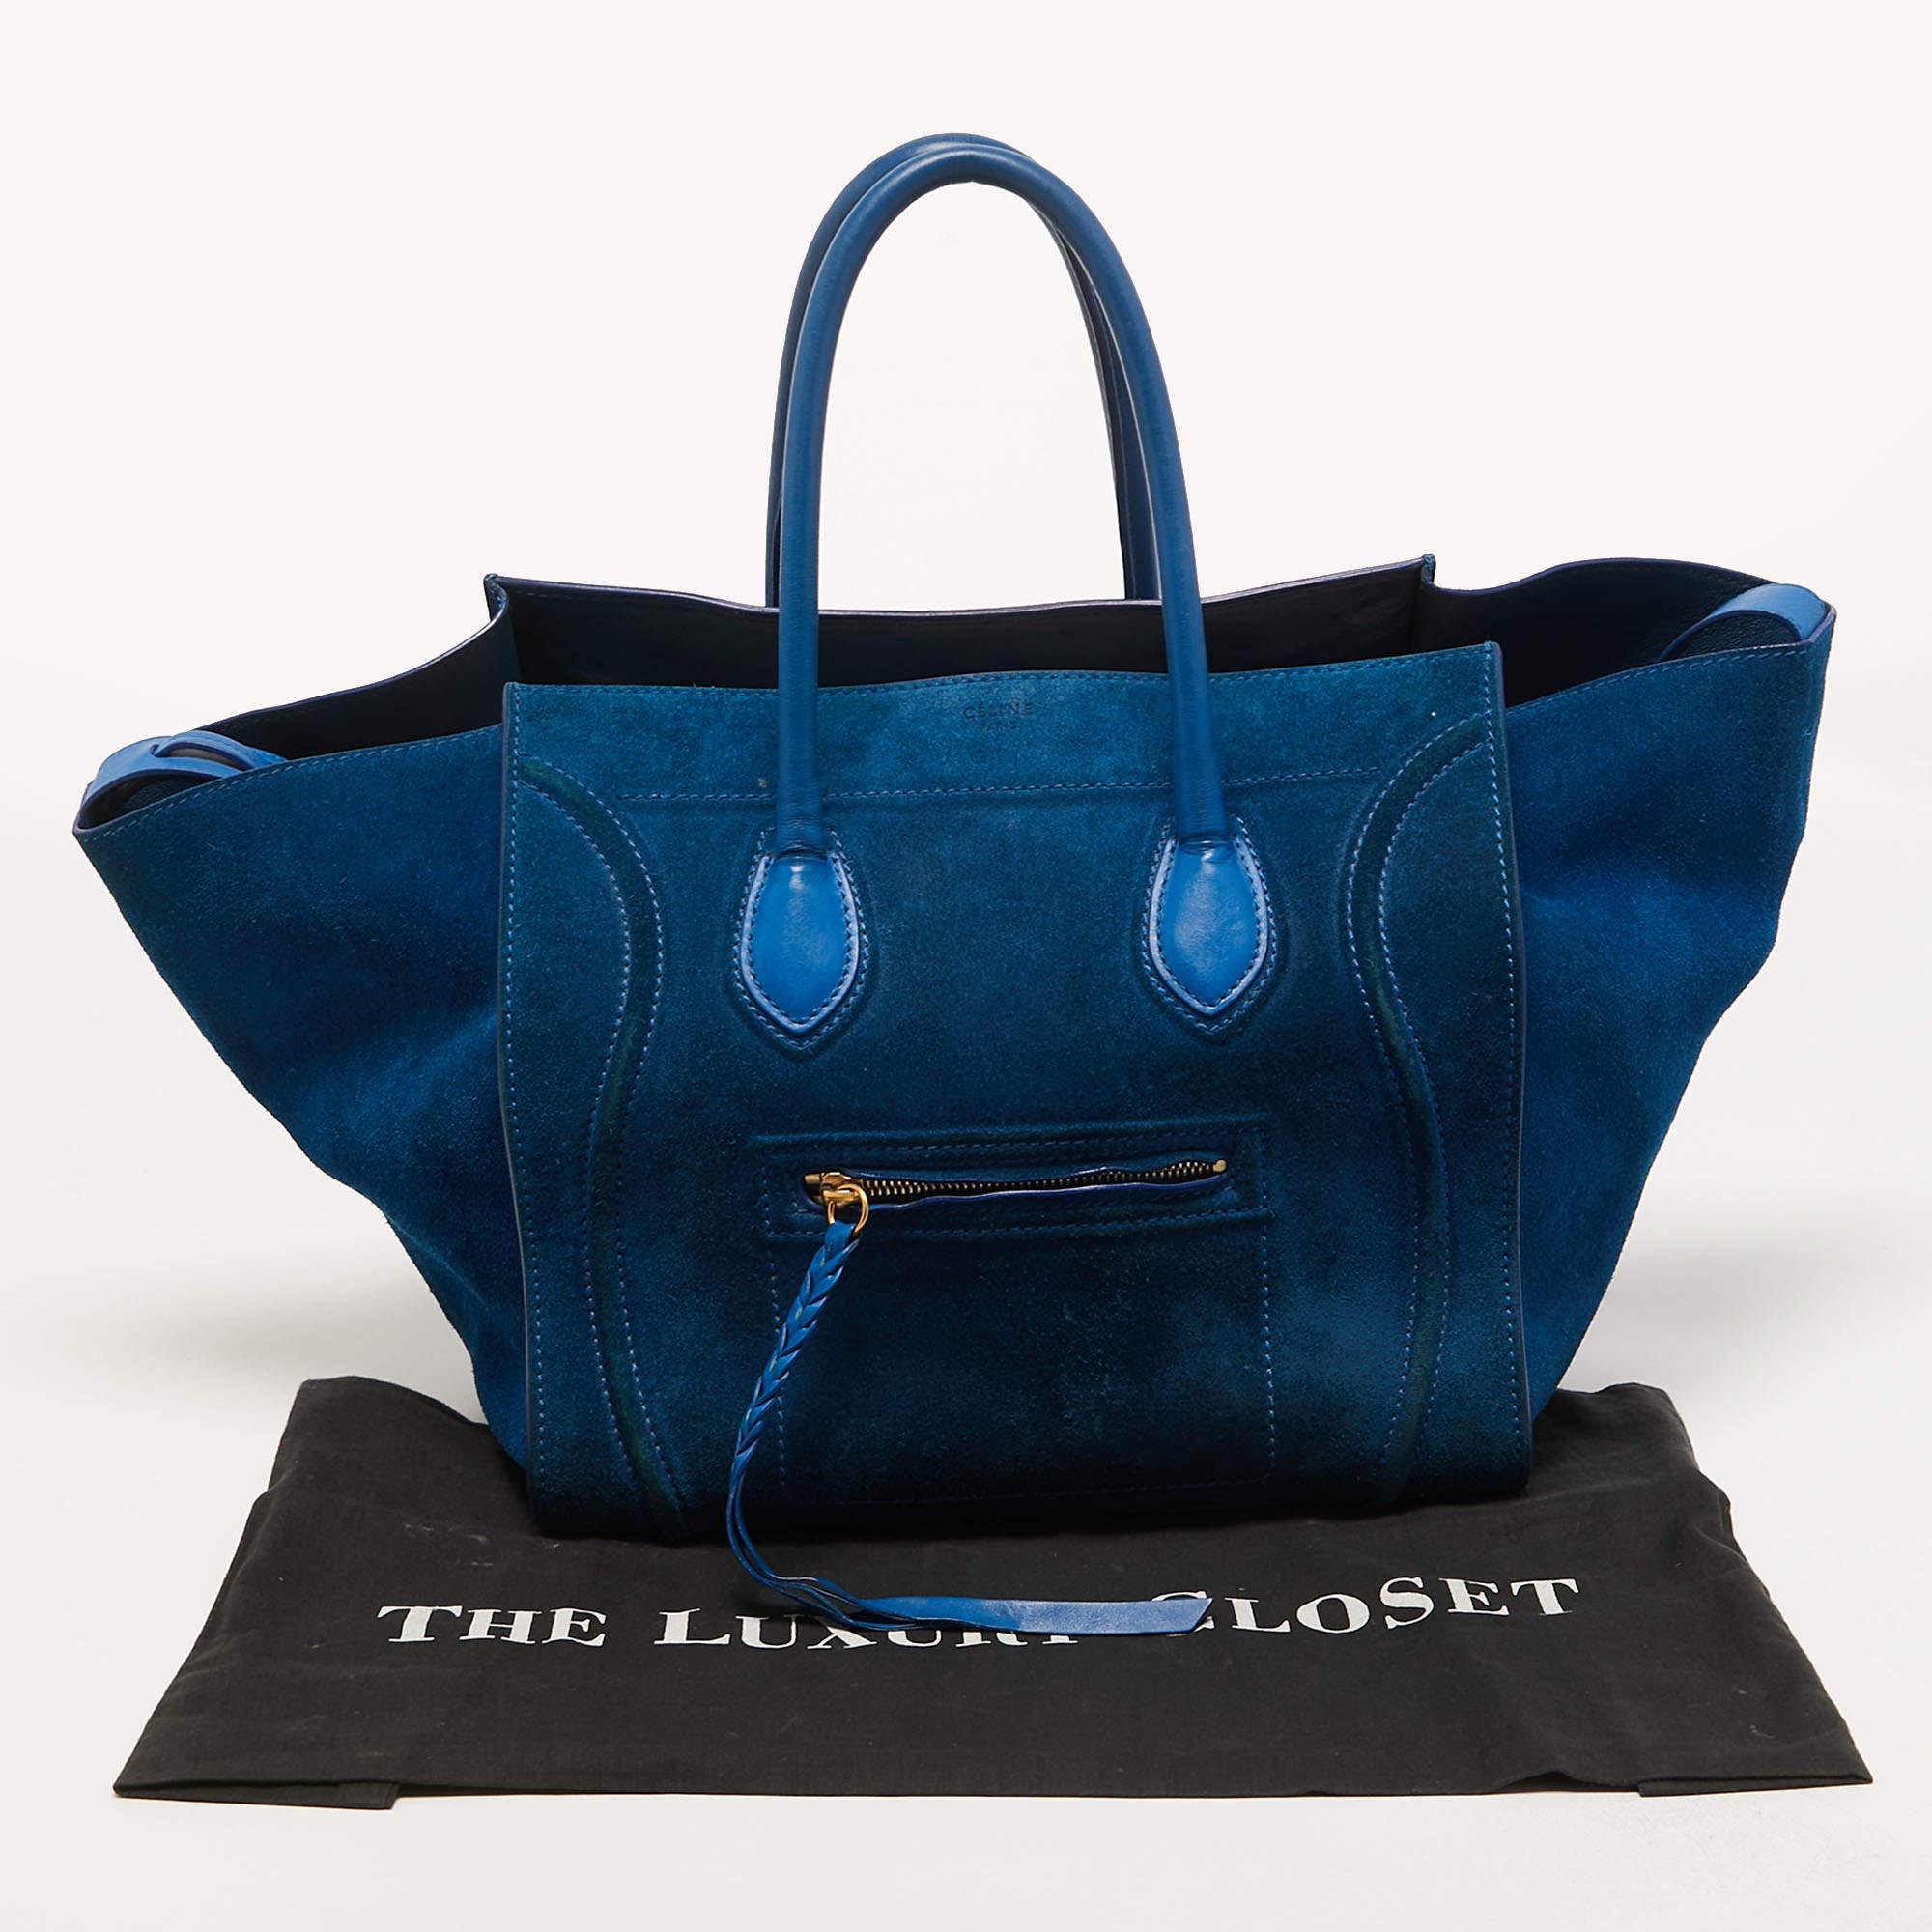 Celine Blue Leather and Suede Medium Phantom Luggage Tote 16